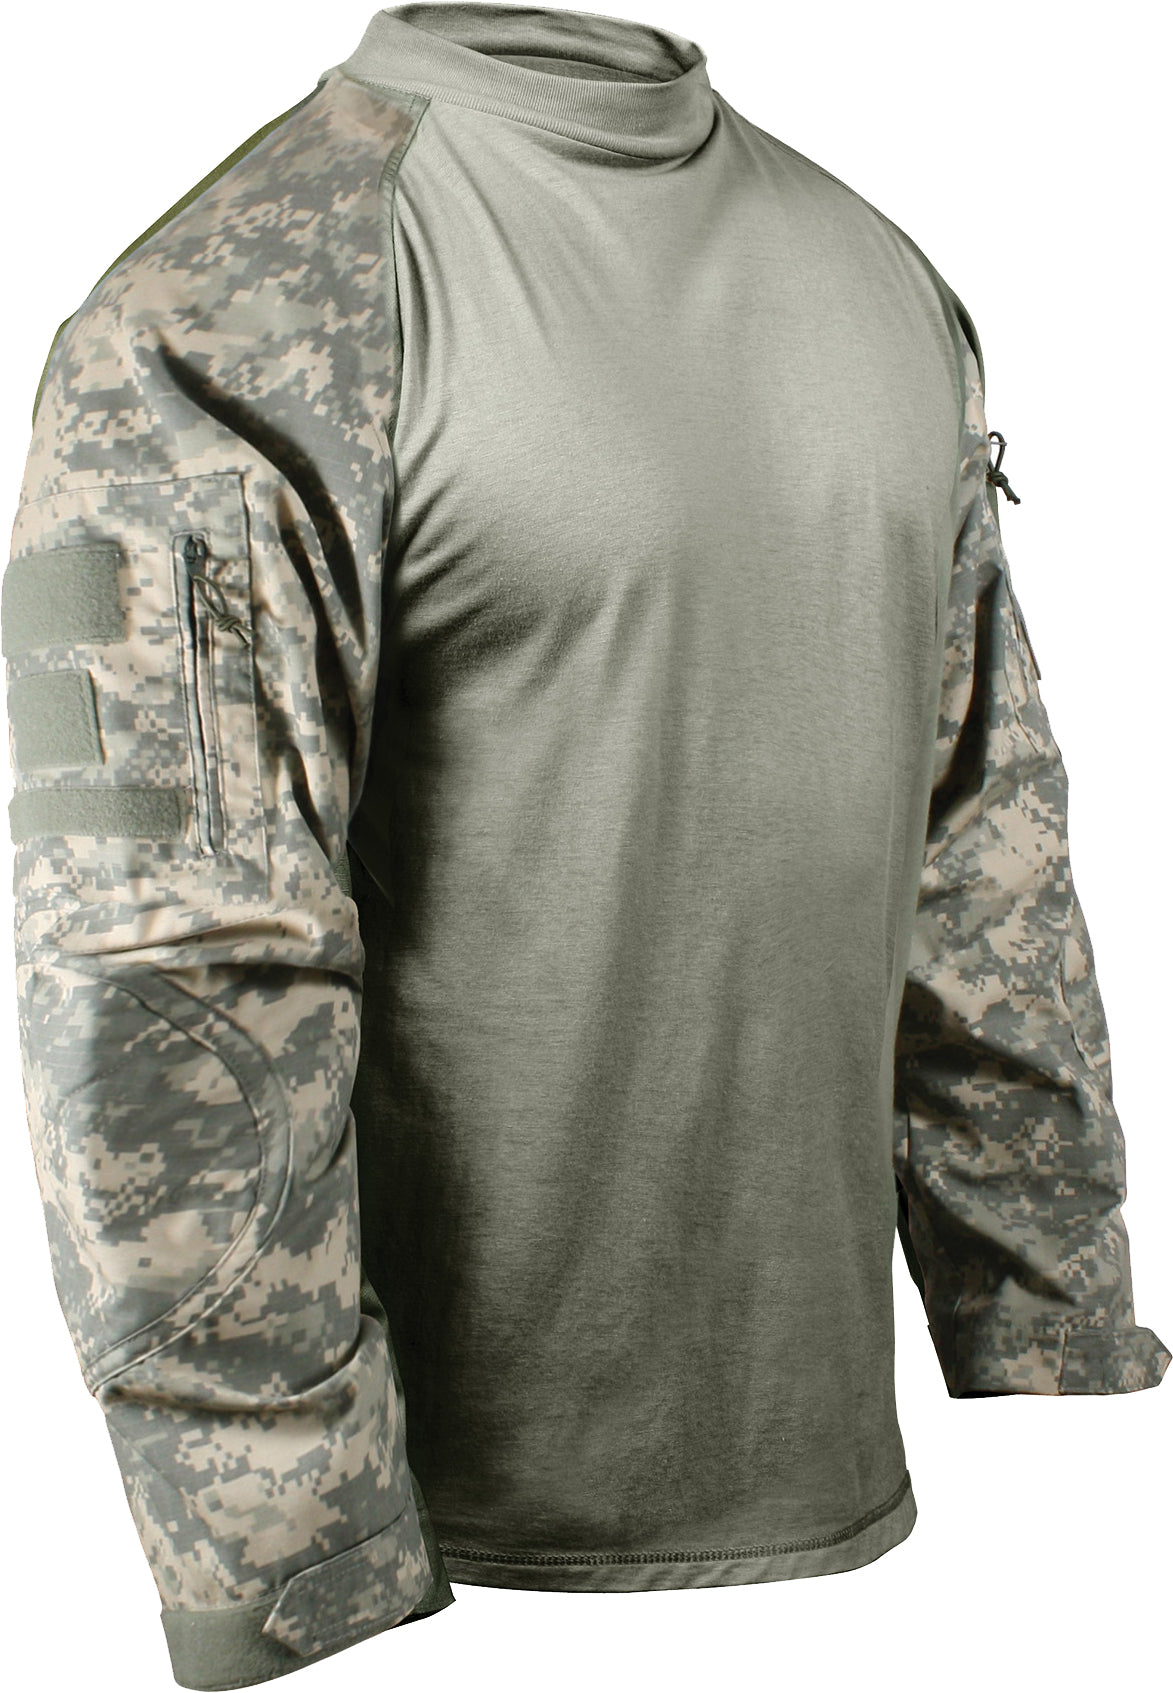 ACU Digital Camo - Tactical NYCO Airsoft Combat Shirt